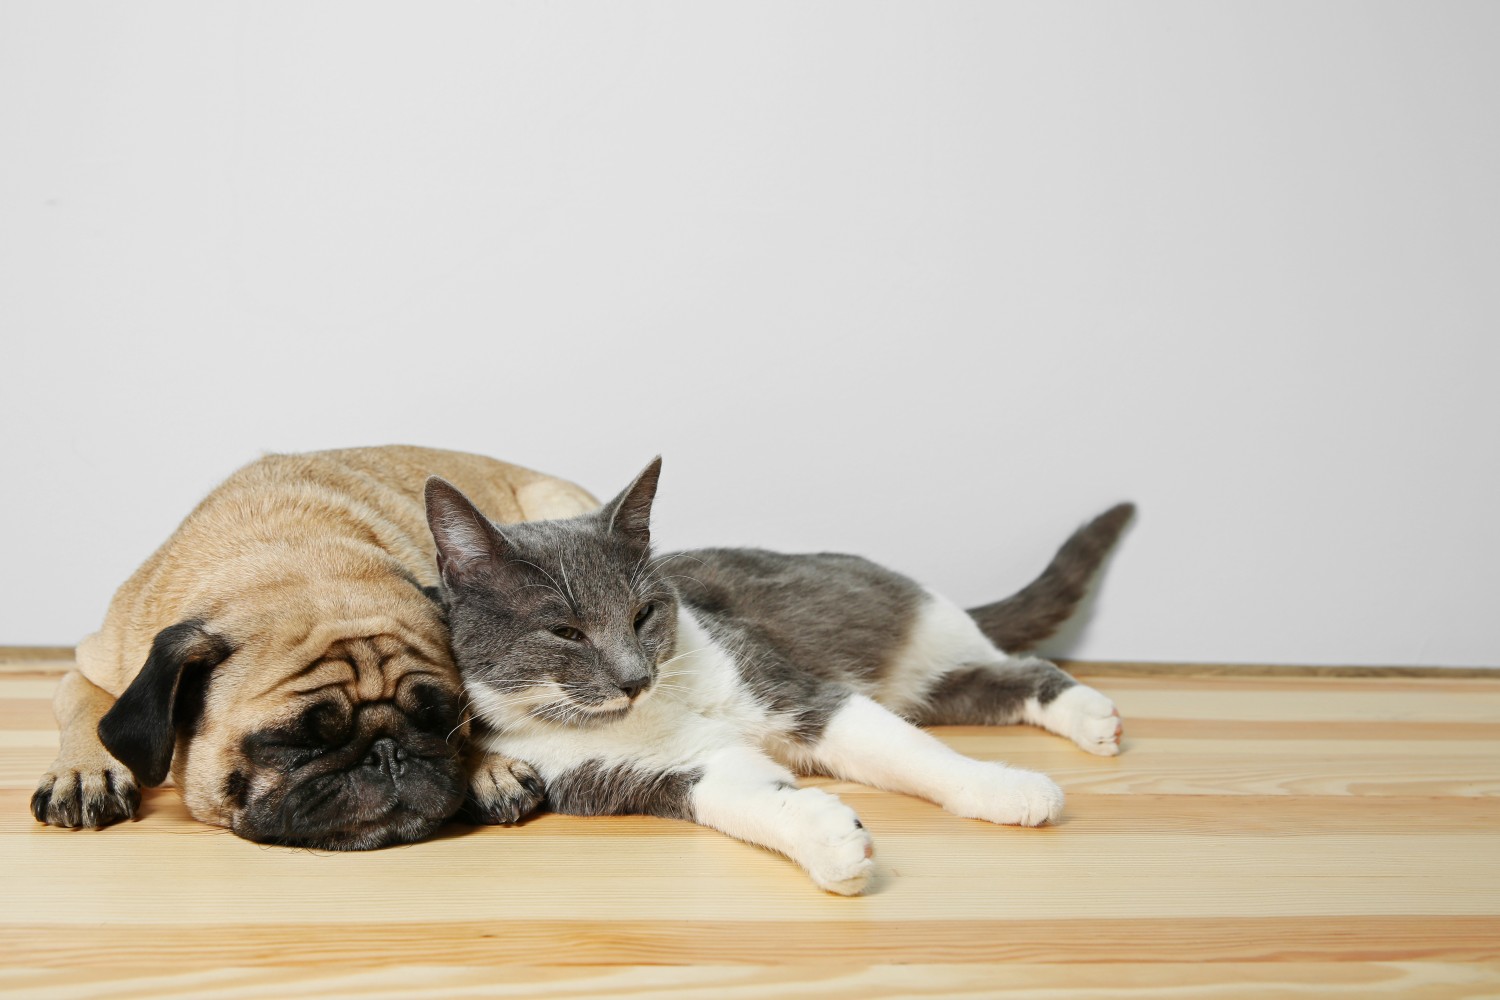 Cat & Dog Snuggled - About Orangevale Veterinary Hospital, Inc. in Orangevale, CA